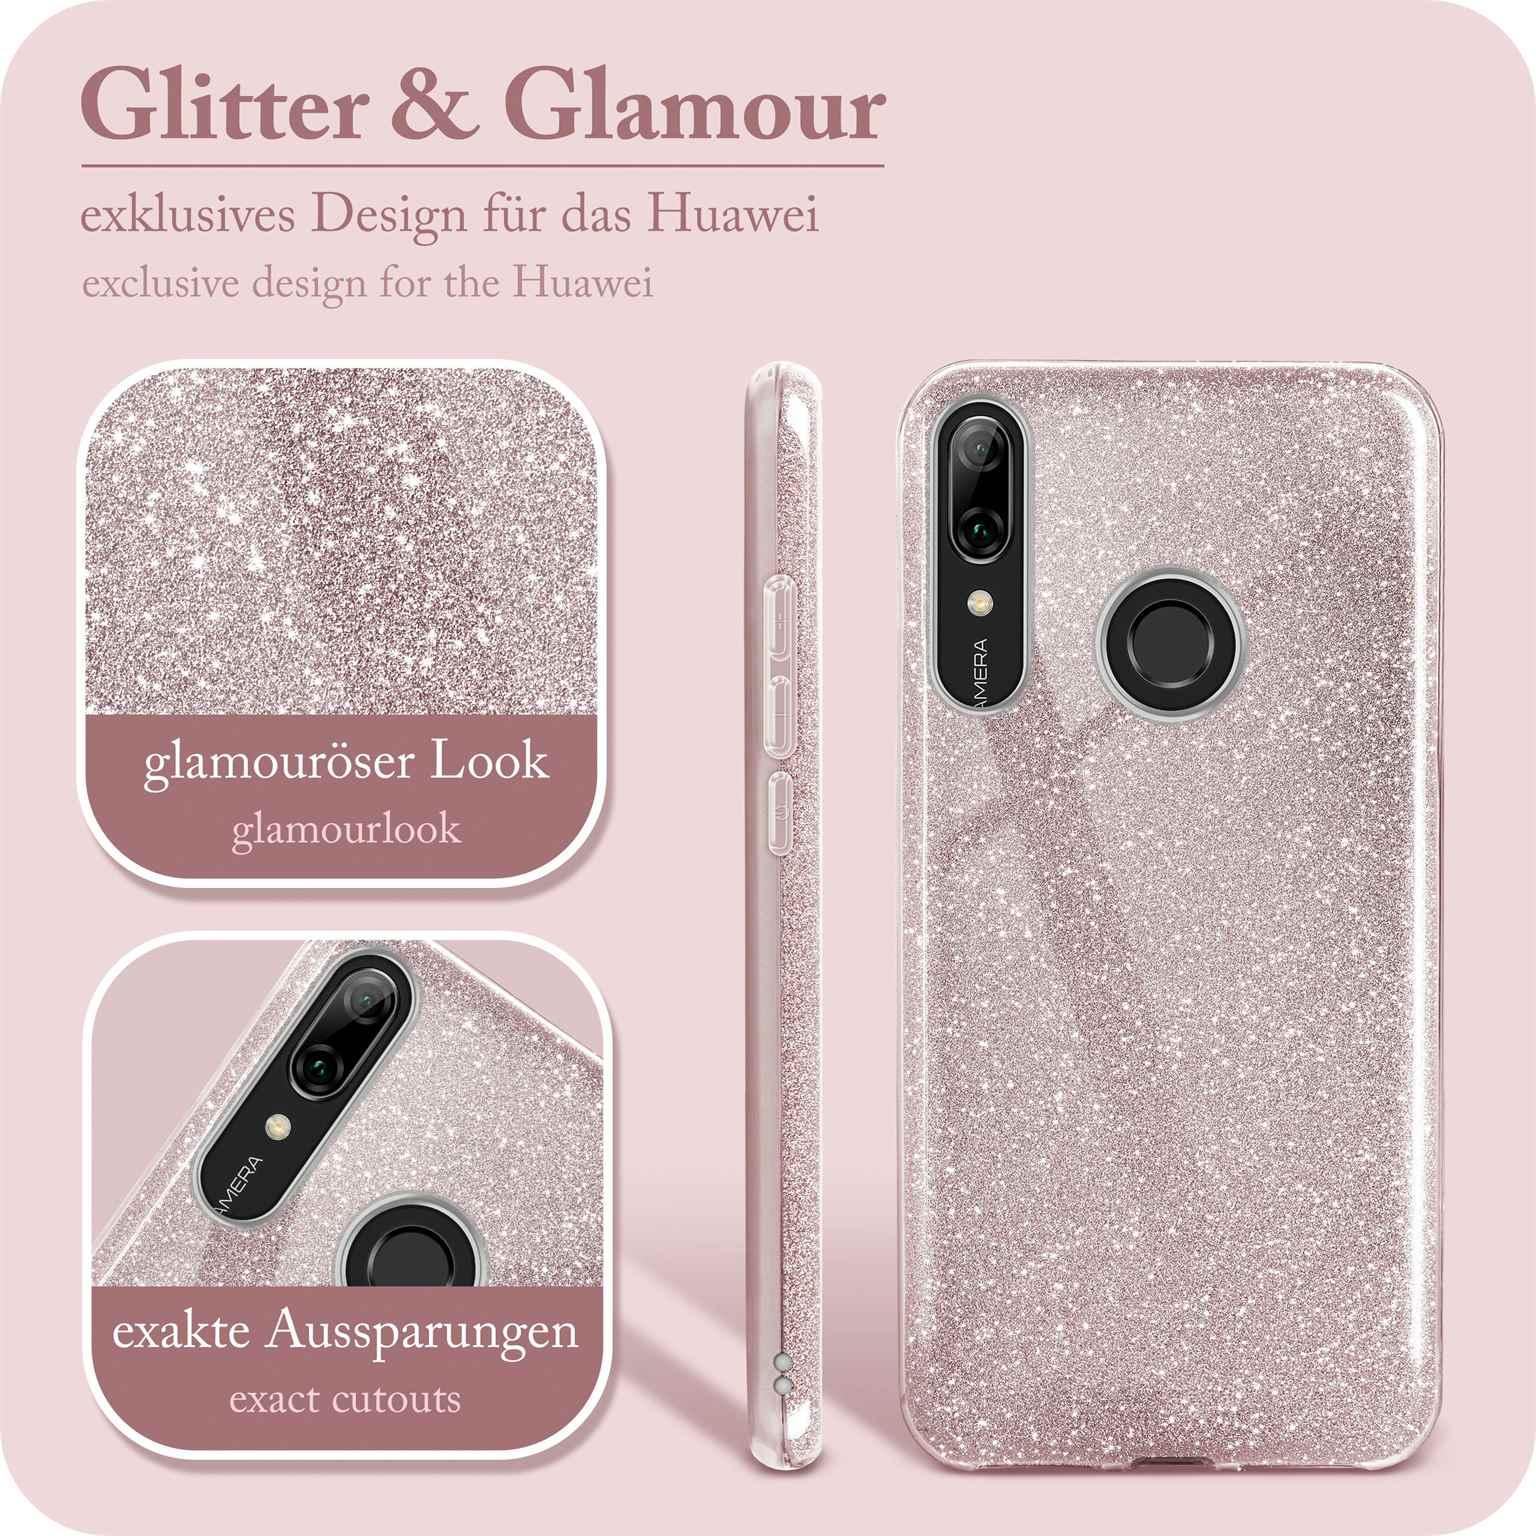 ONEFLOW Glitter Case, Backcover, P - Rosé Huawei, Gloss 2019, smart